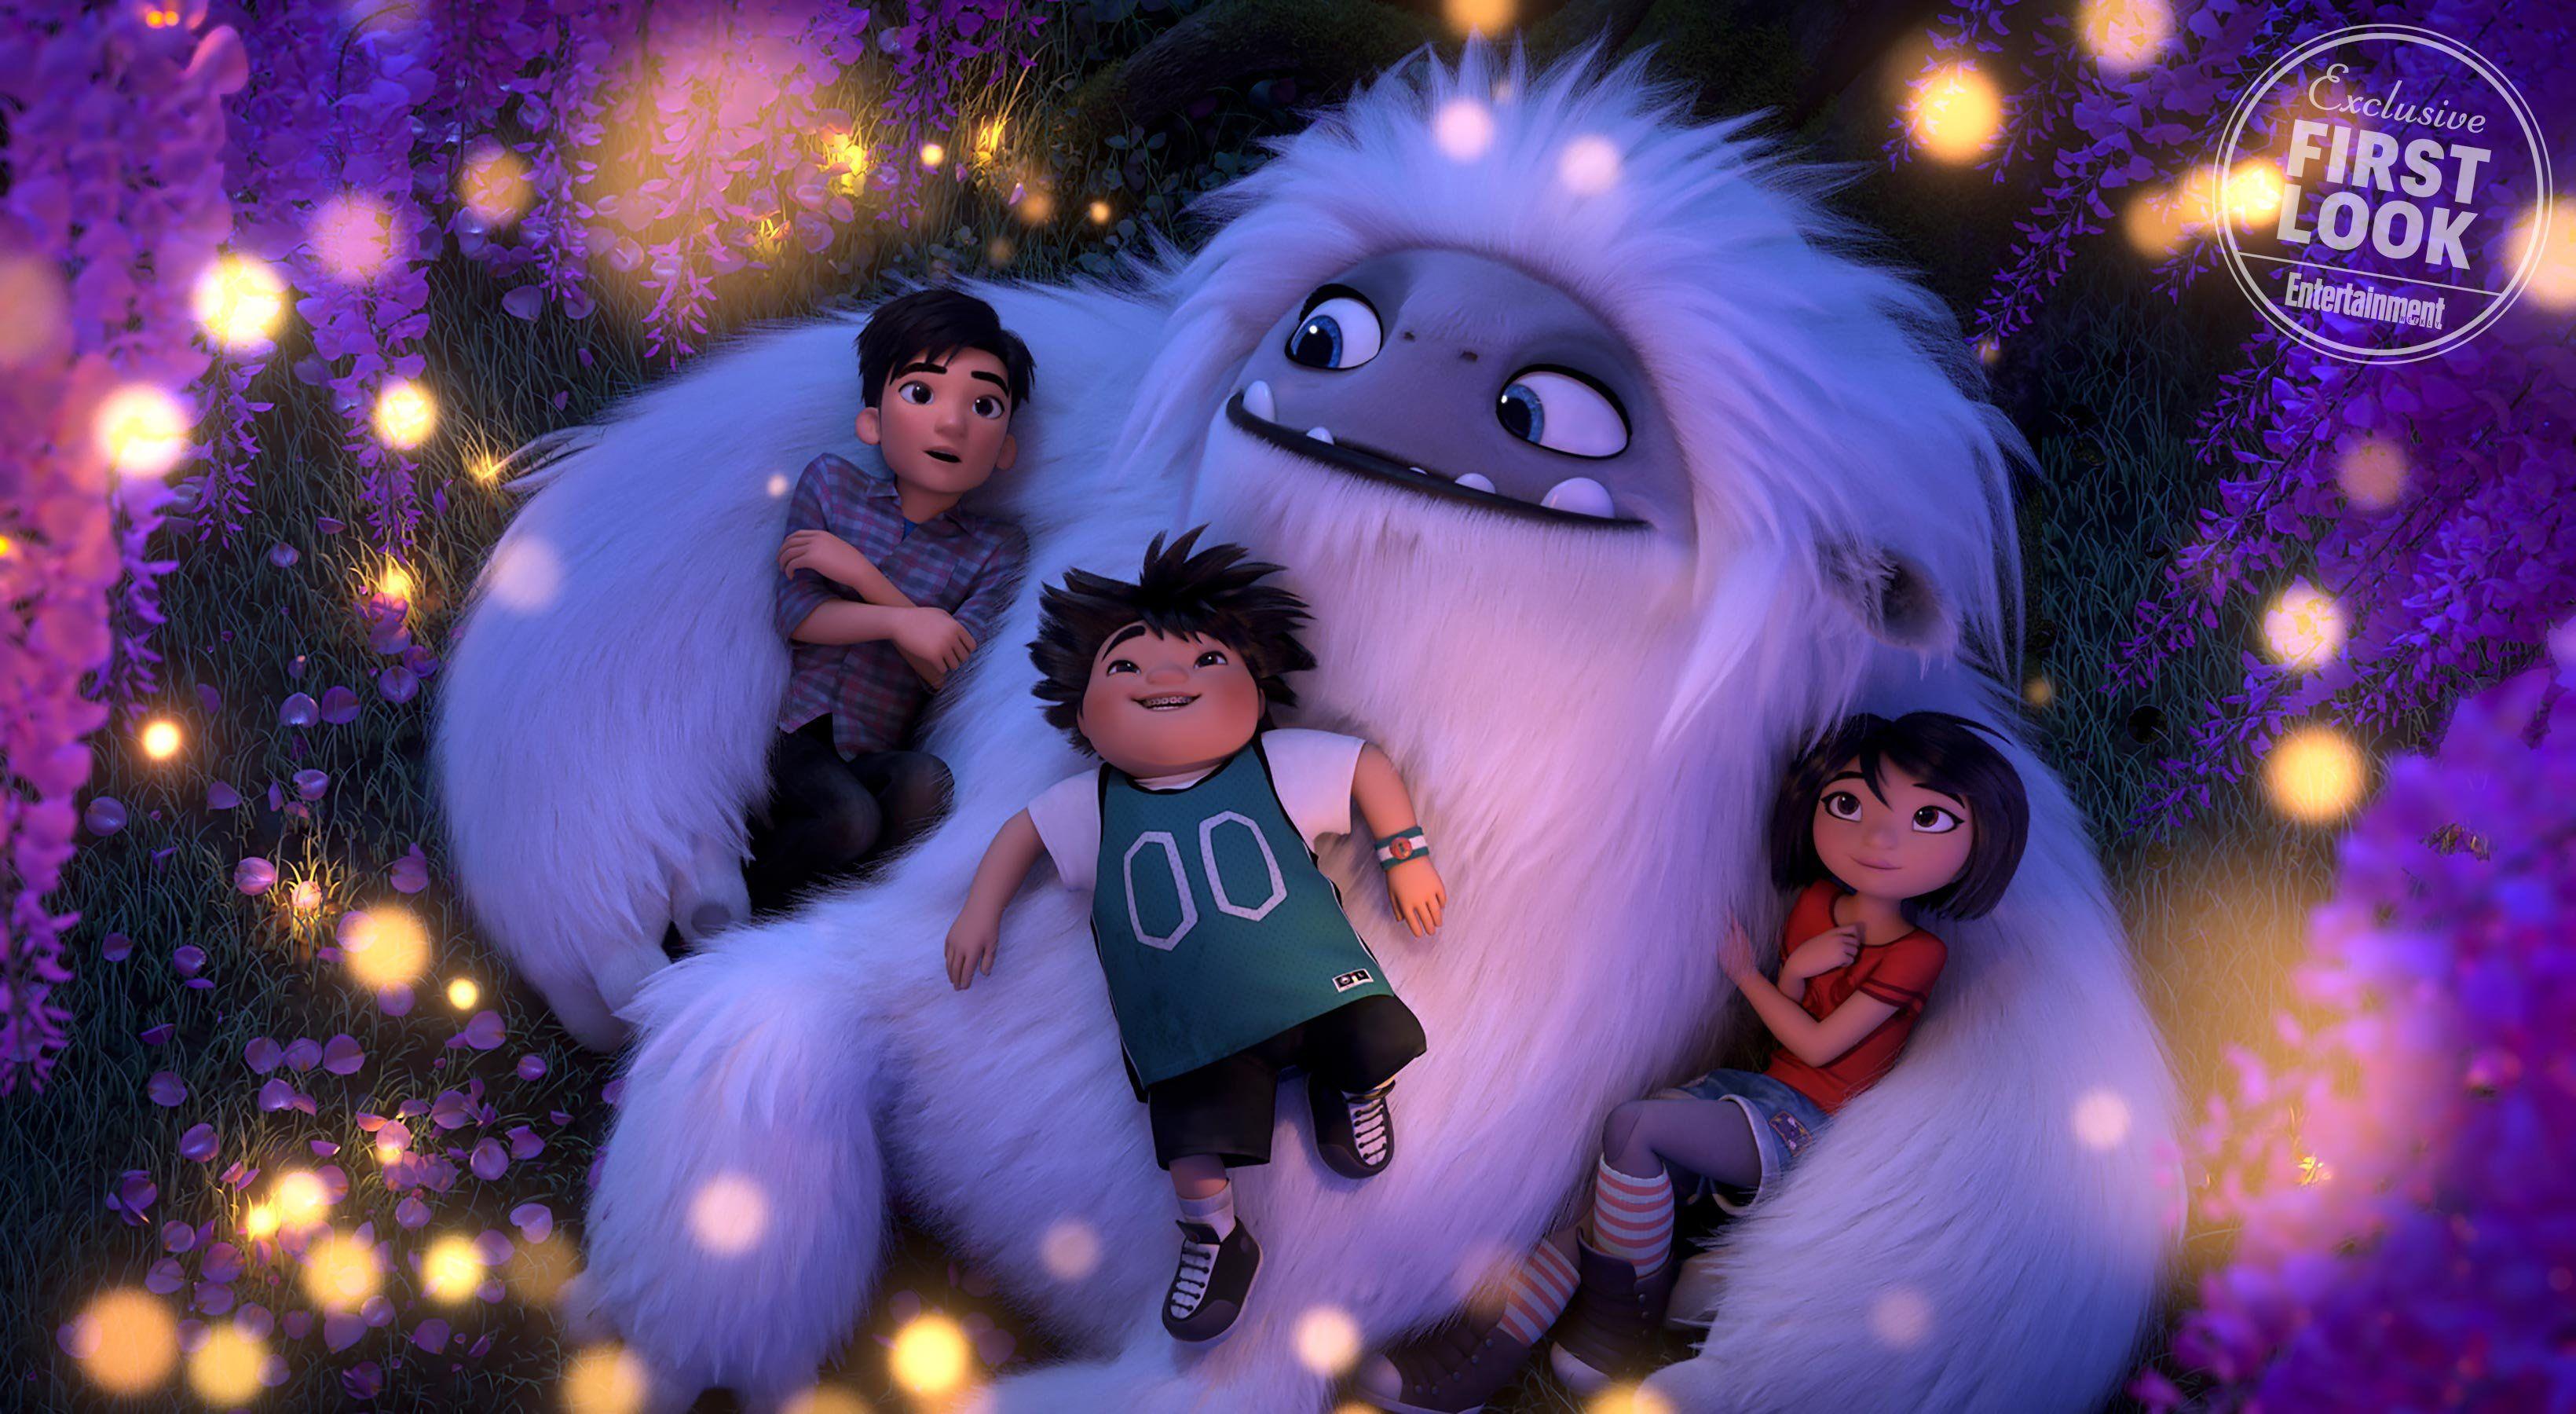 Meet the fuzzy yeti hero of Abominable, DreamWorks' next film